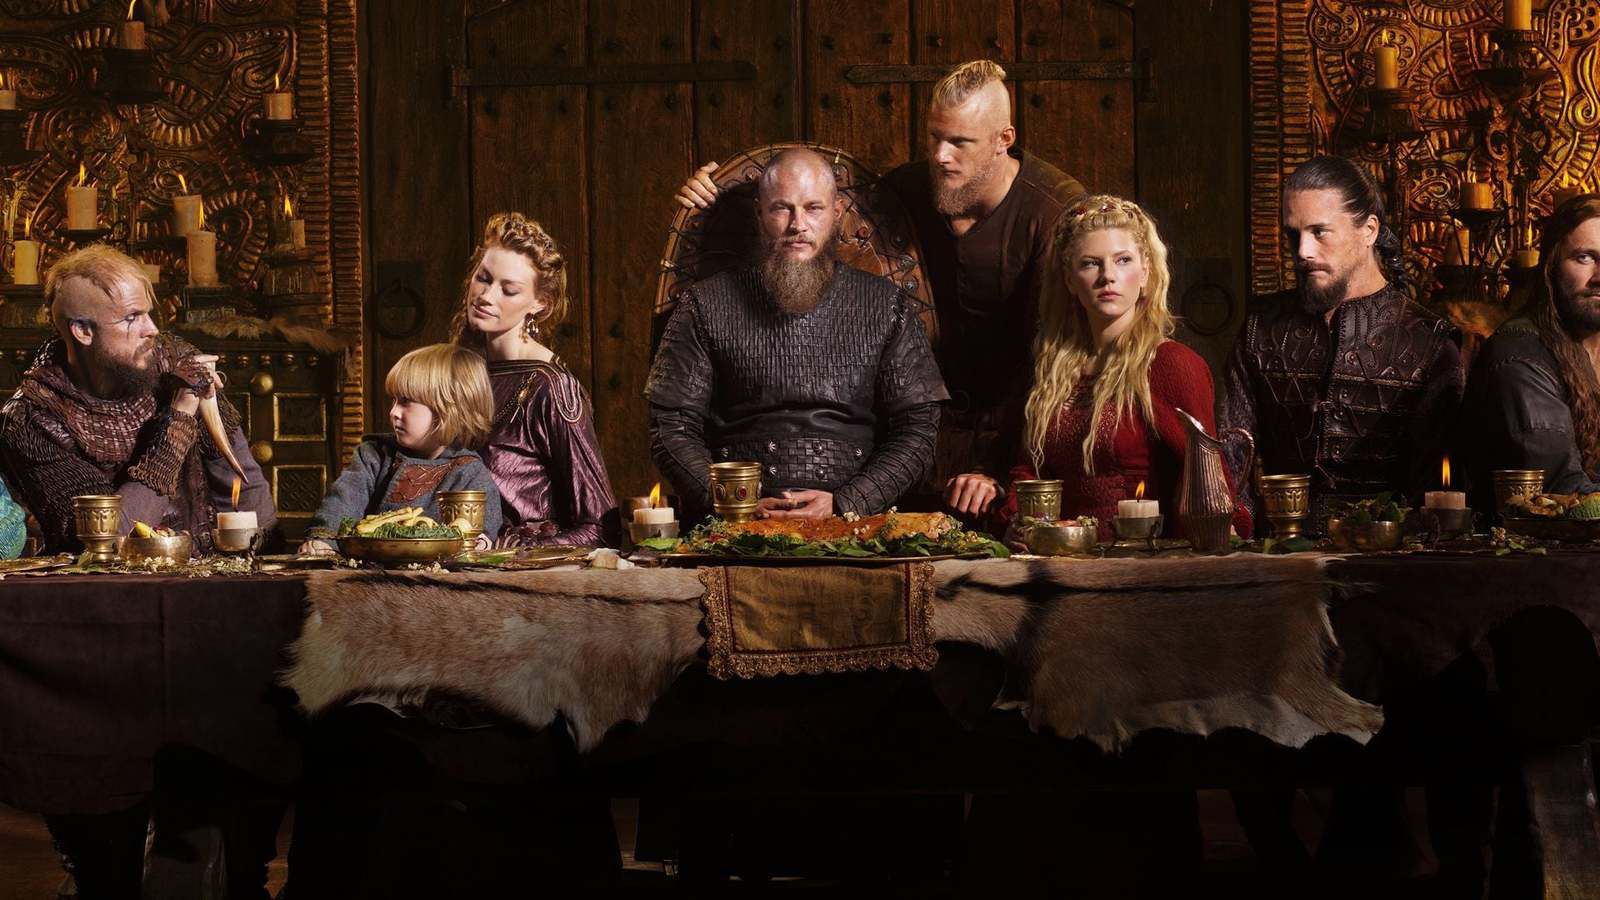 Vikings. Season 6 Episode 9 (Watch Online) Full Episodes